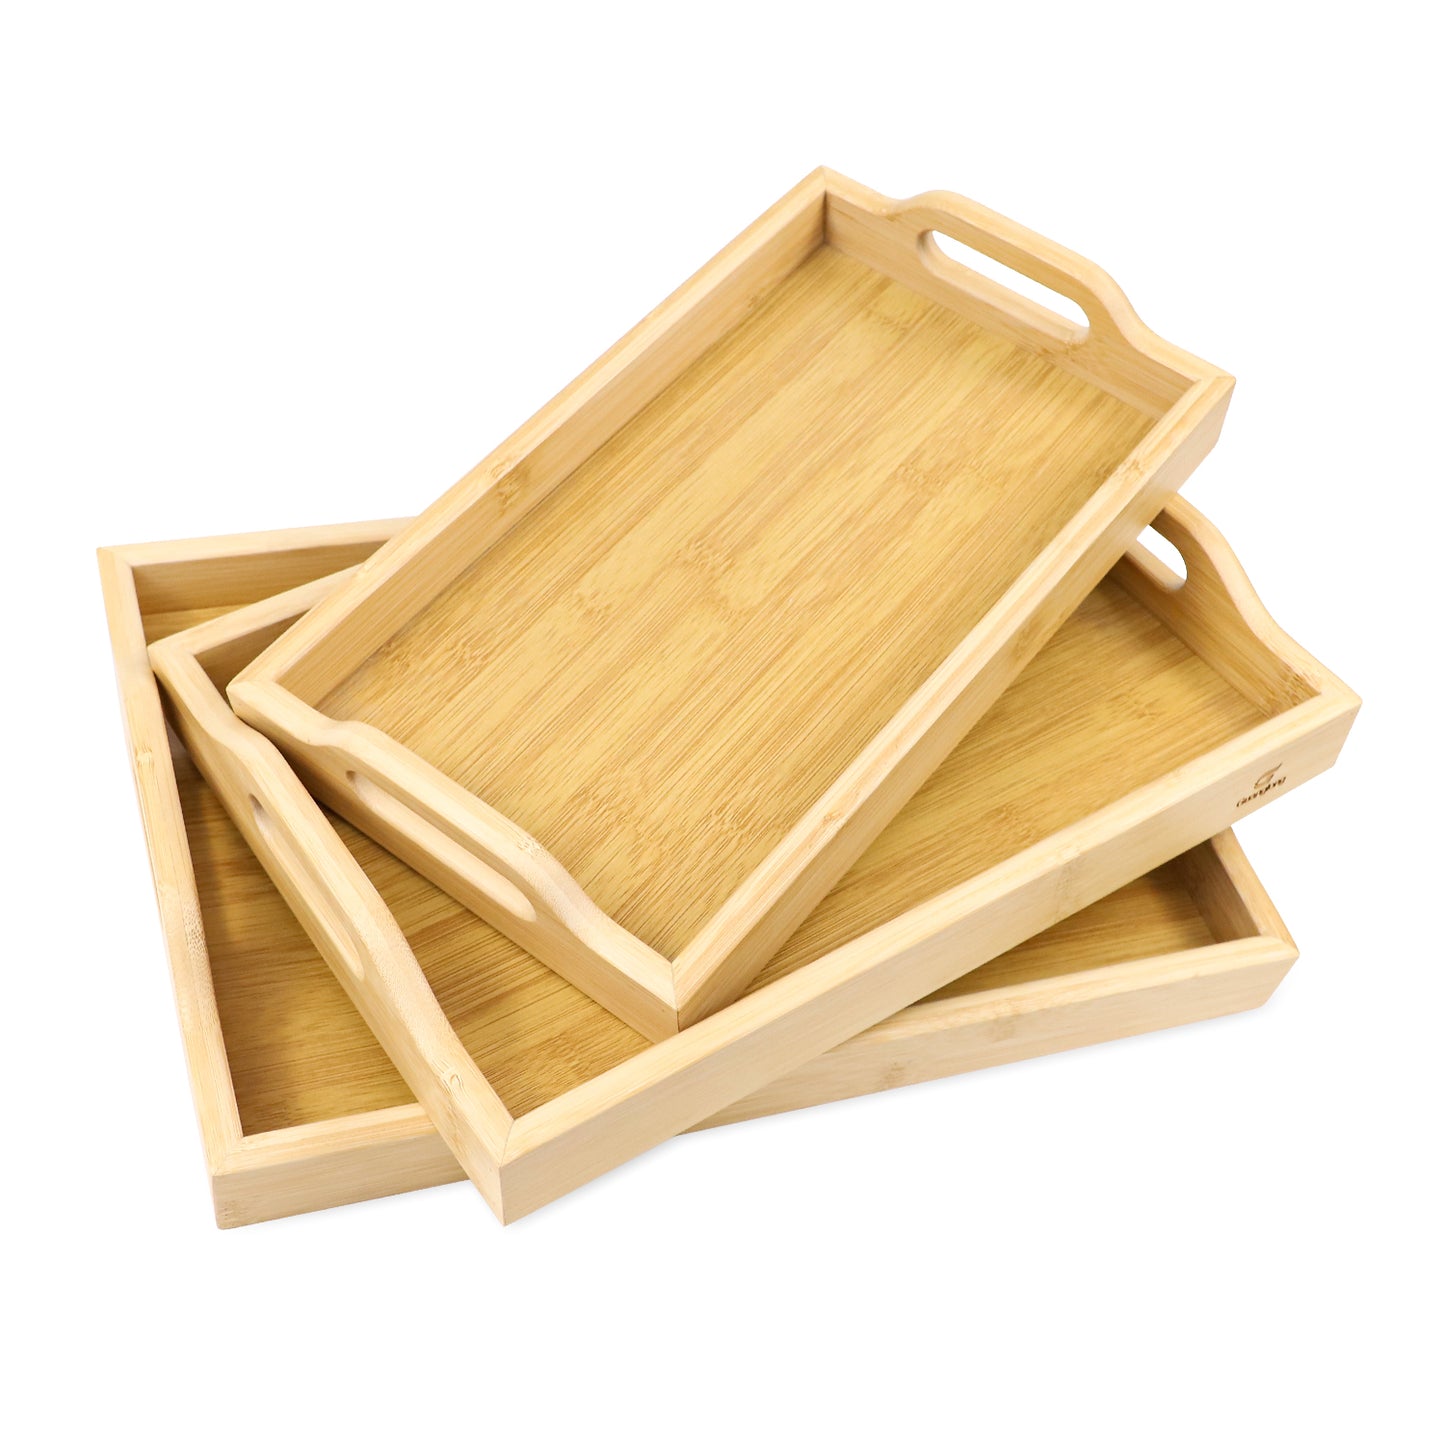 GL-Bamboo 3PCS Set Custom Serving tray bamboo wooden tray Coffee Table Wooden Bamboo Serving Tray with Handles